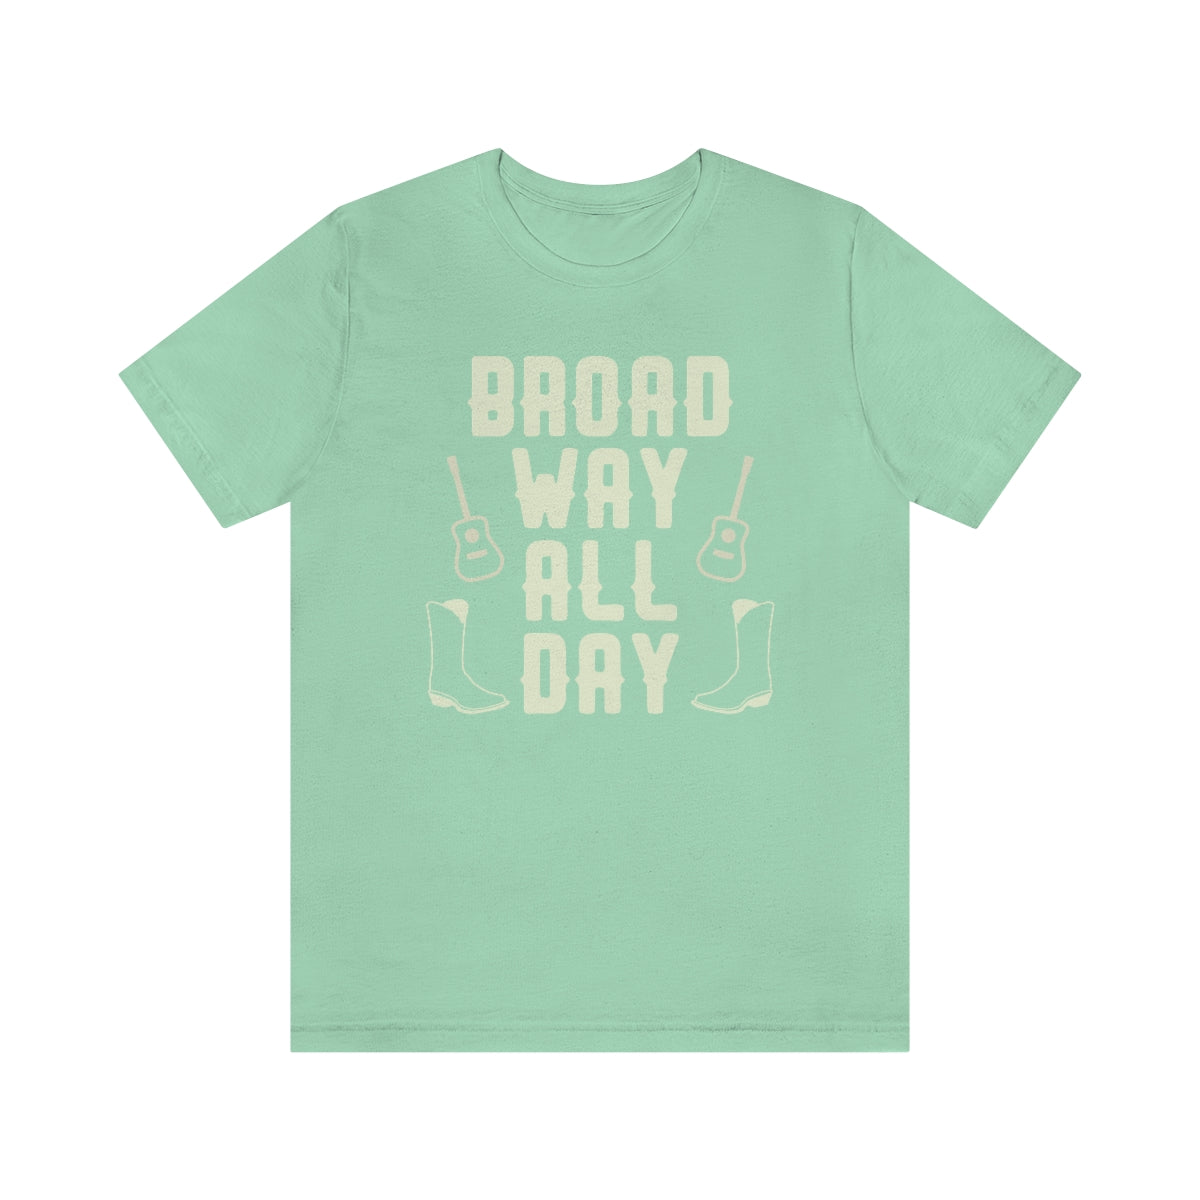 Broad Way All Day Tshirt